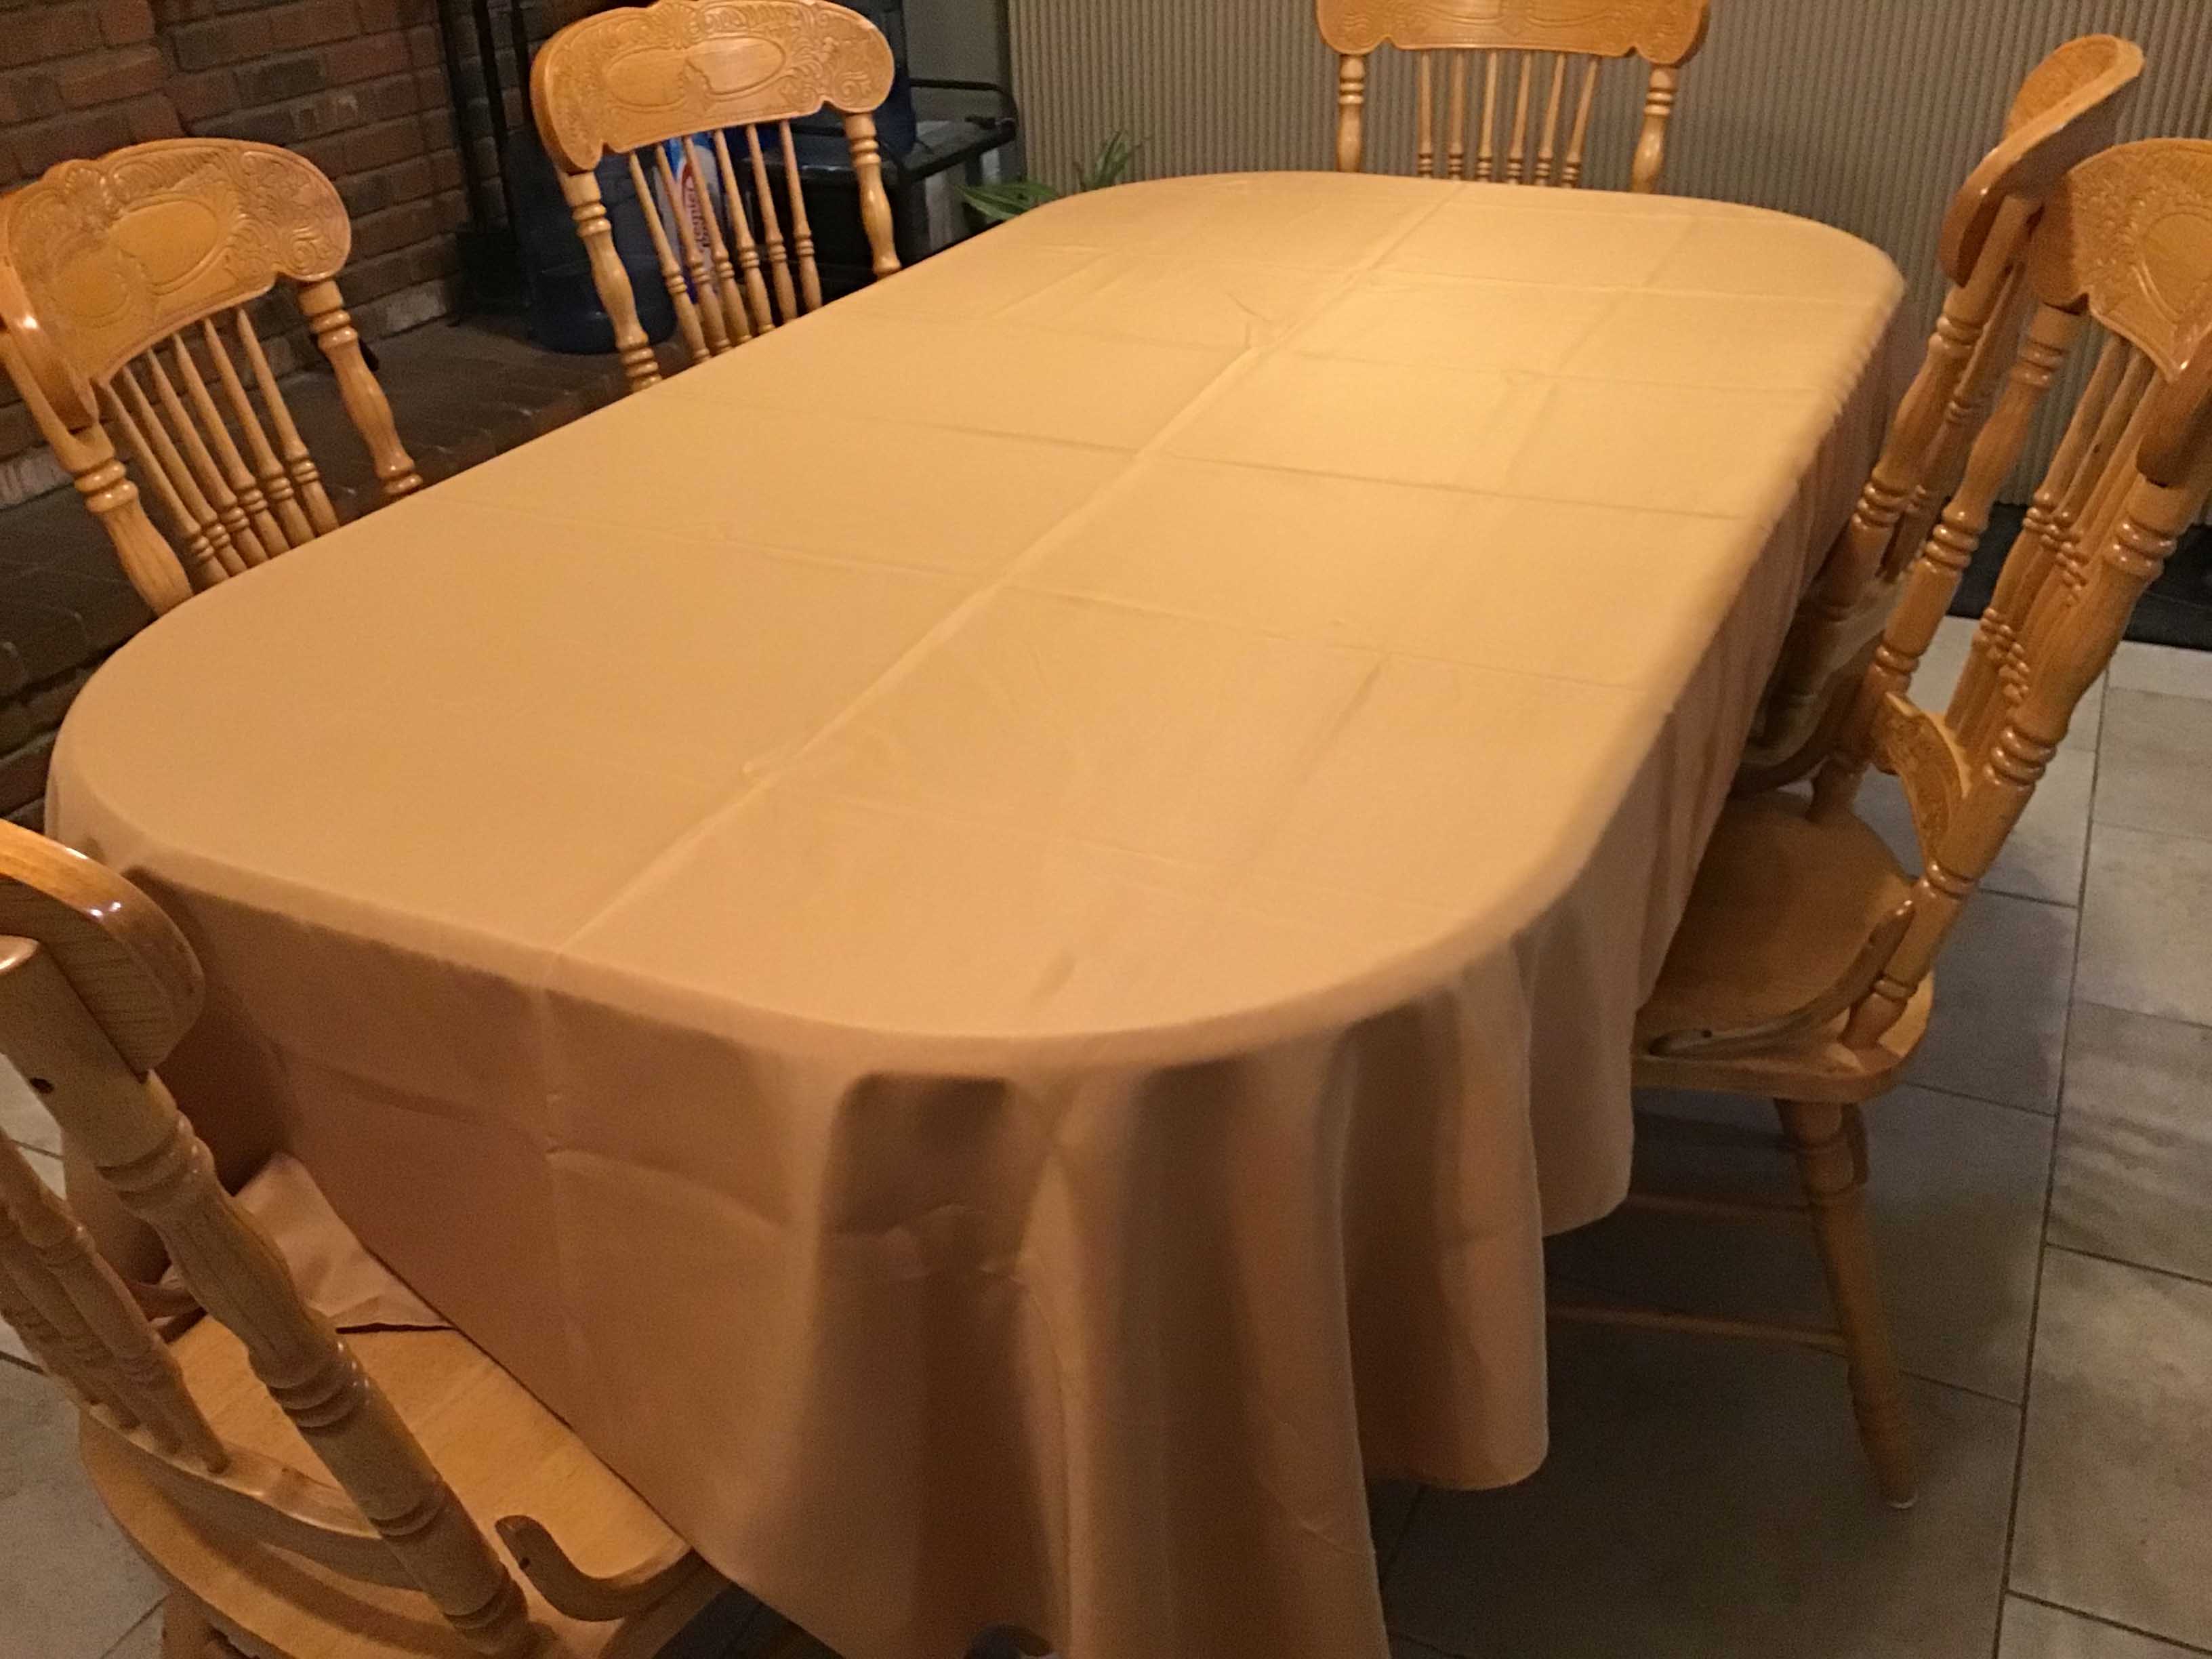 rectangle tablecloths (gold) - 60 x 102